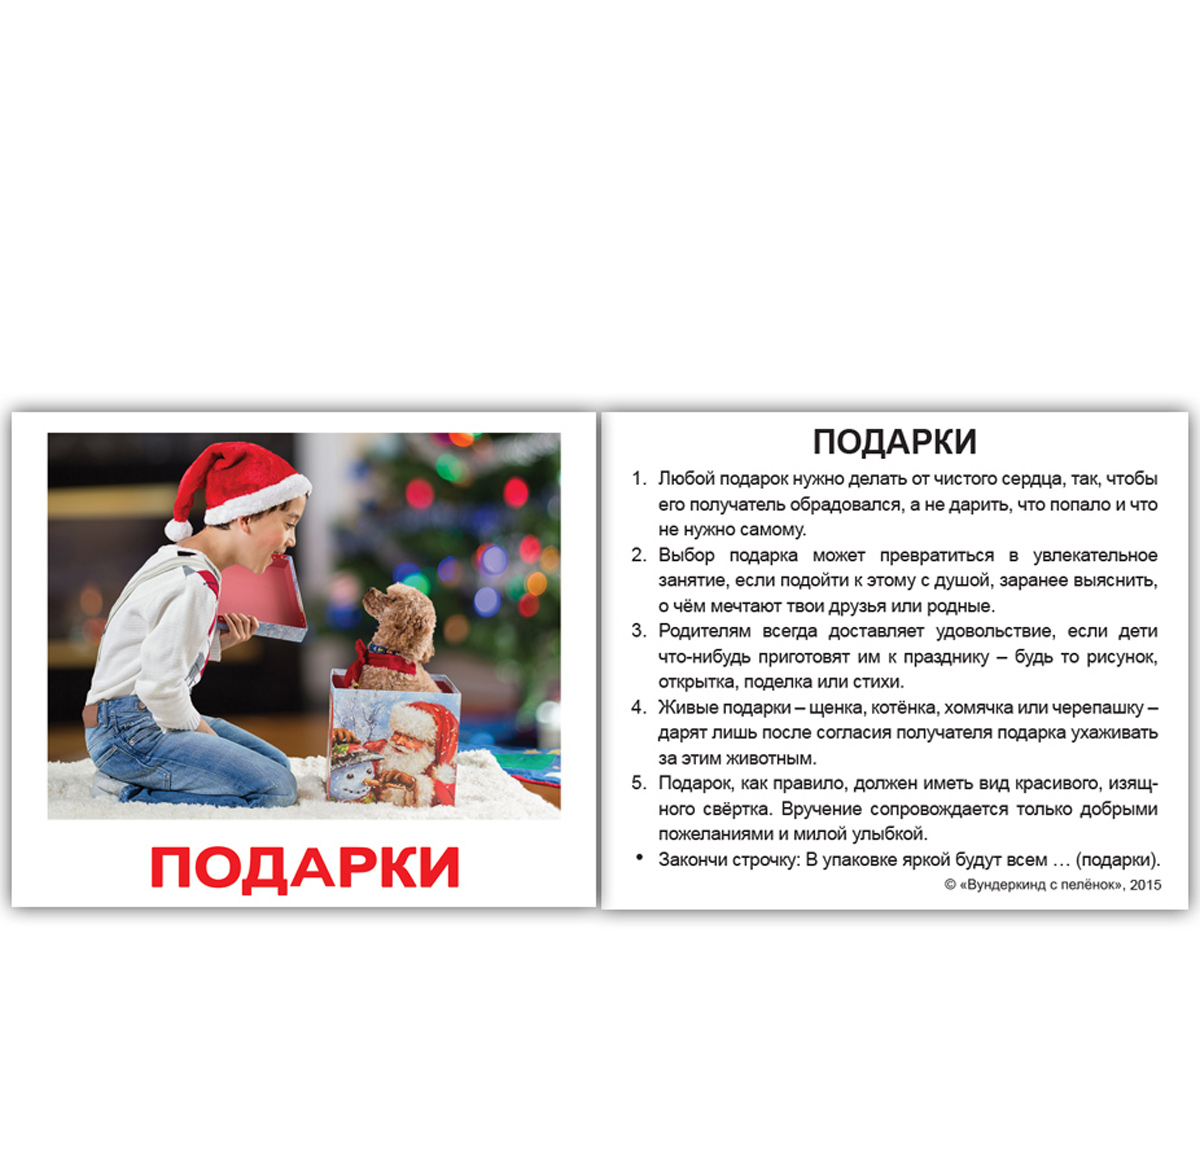 Карточки Домана мини русские с фактами 'Правила поведения'